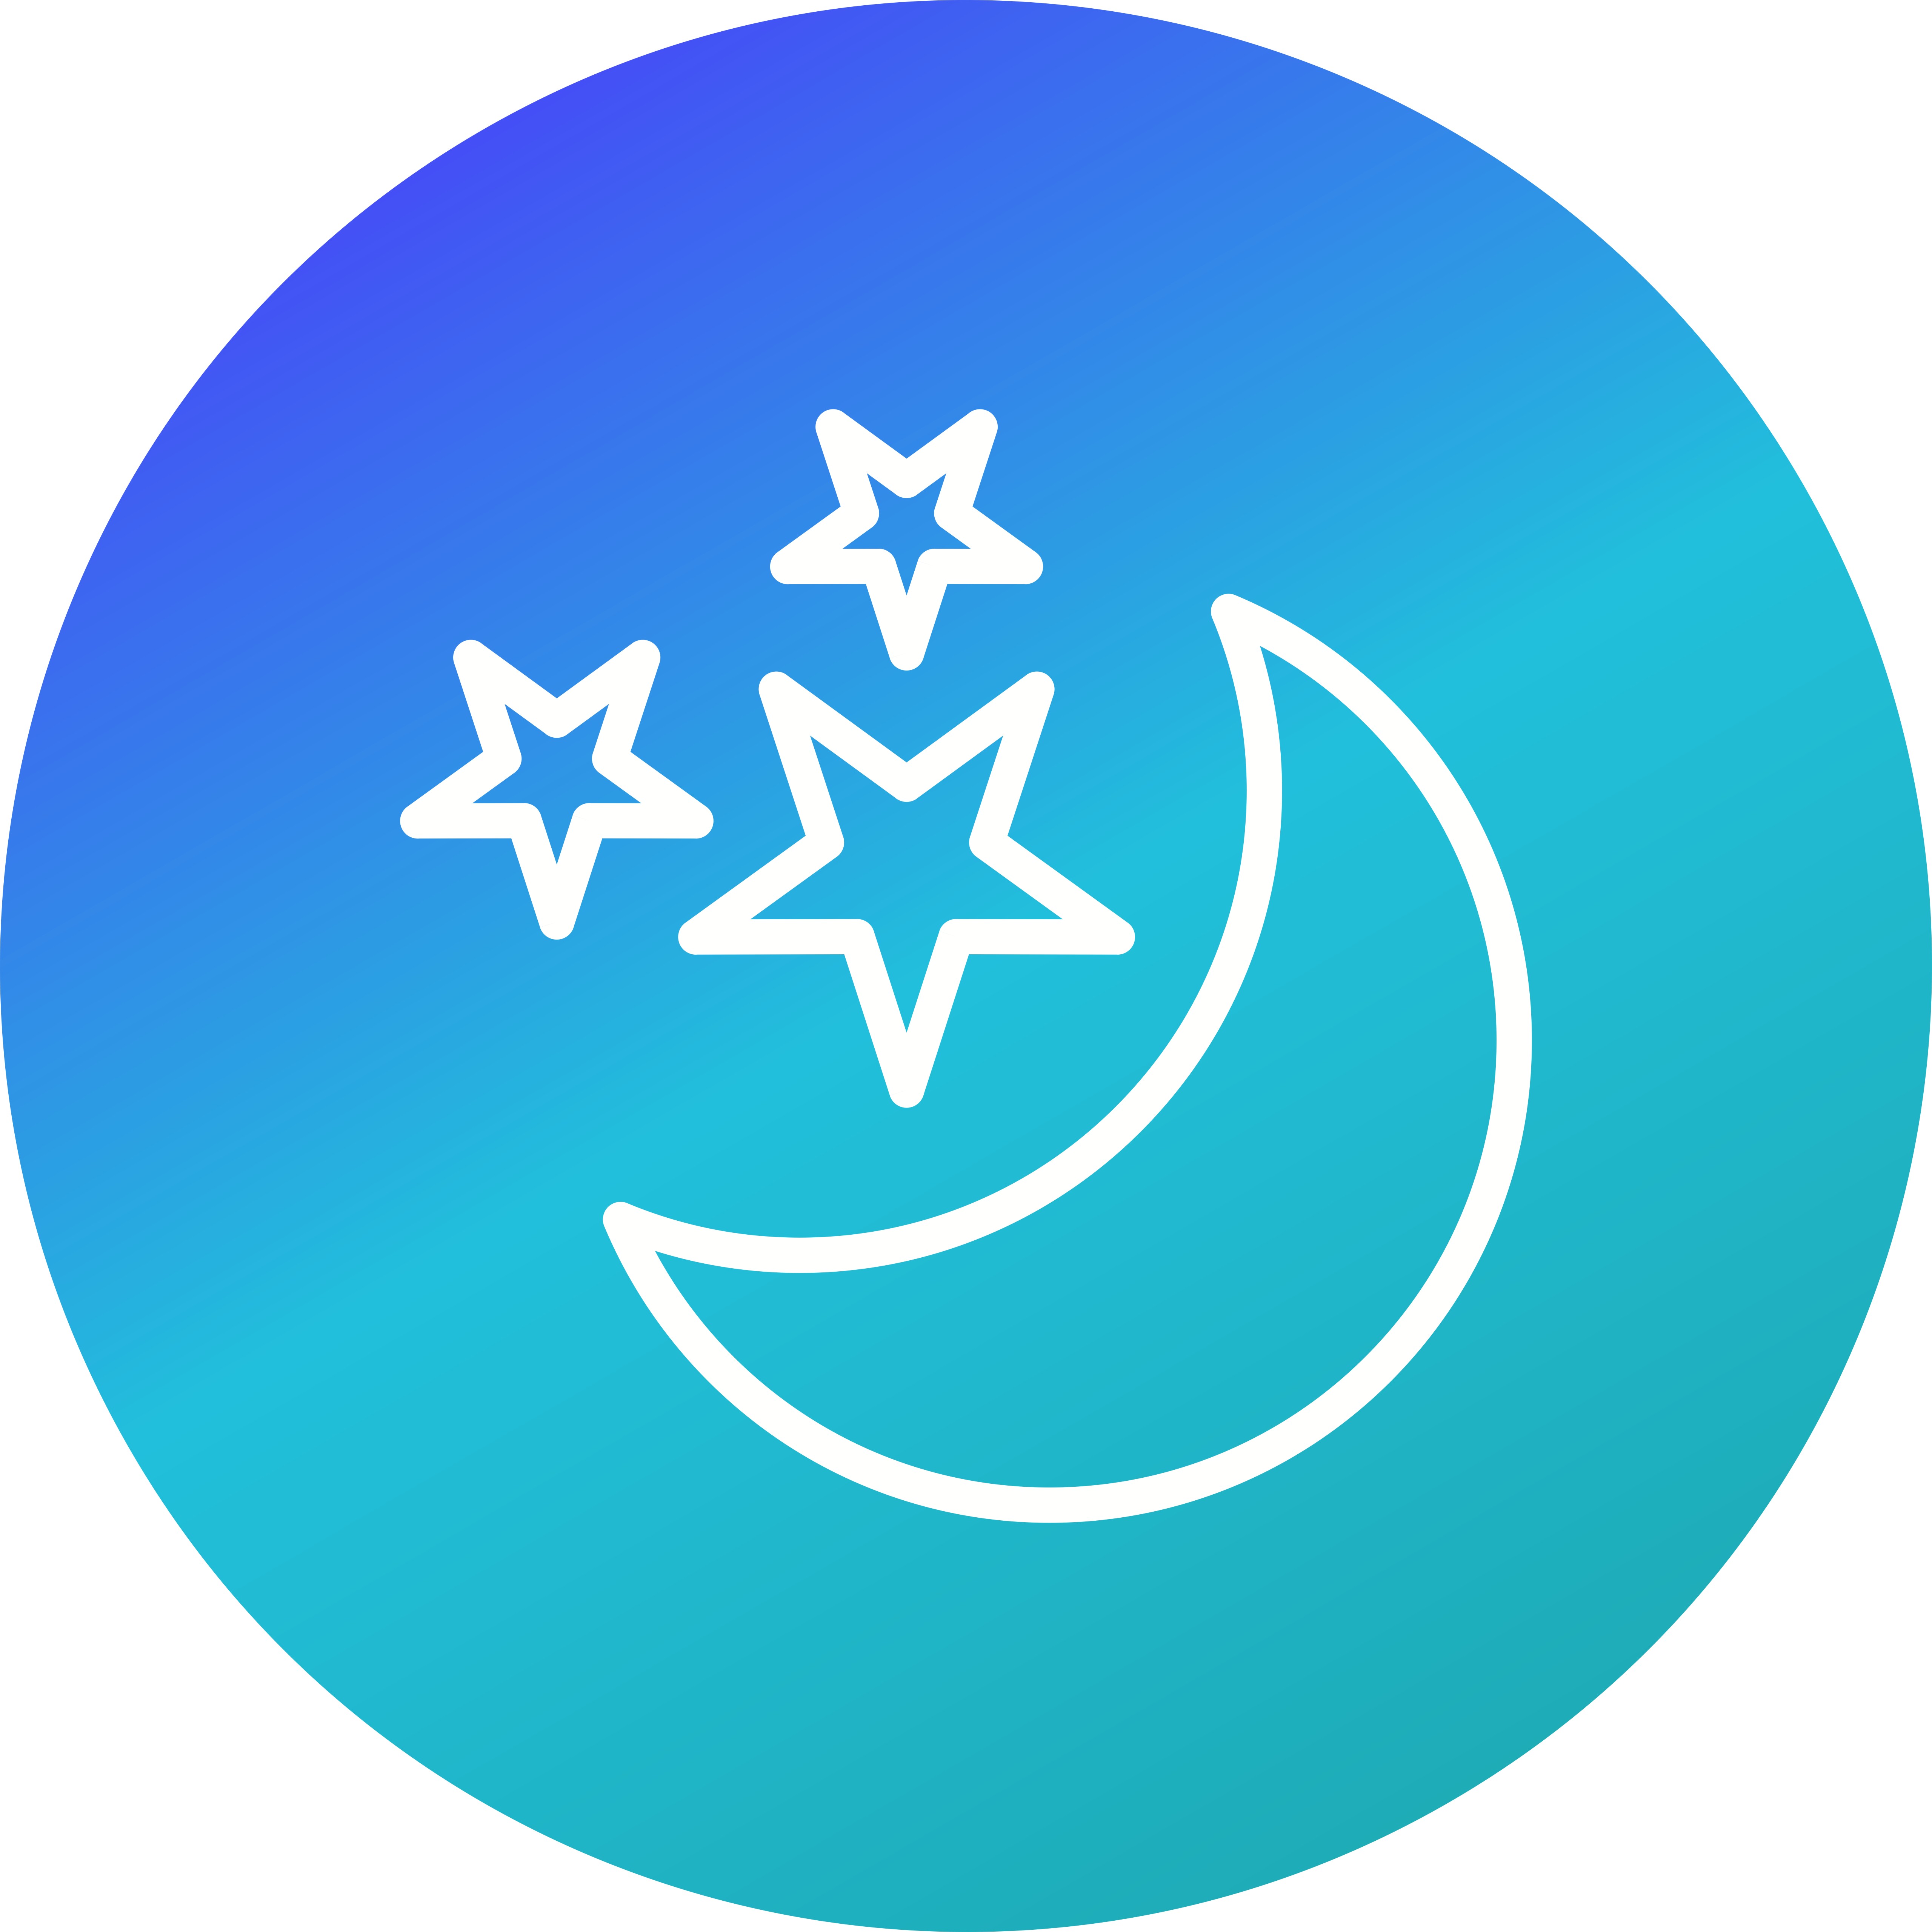 Download Moon And stars Vector Icon - Download Free Vectors, Clipart Graphics & Vector Art